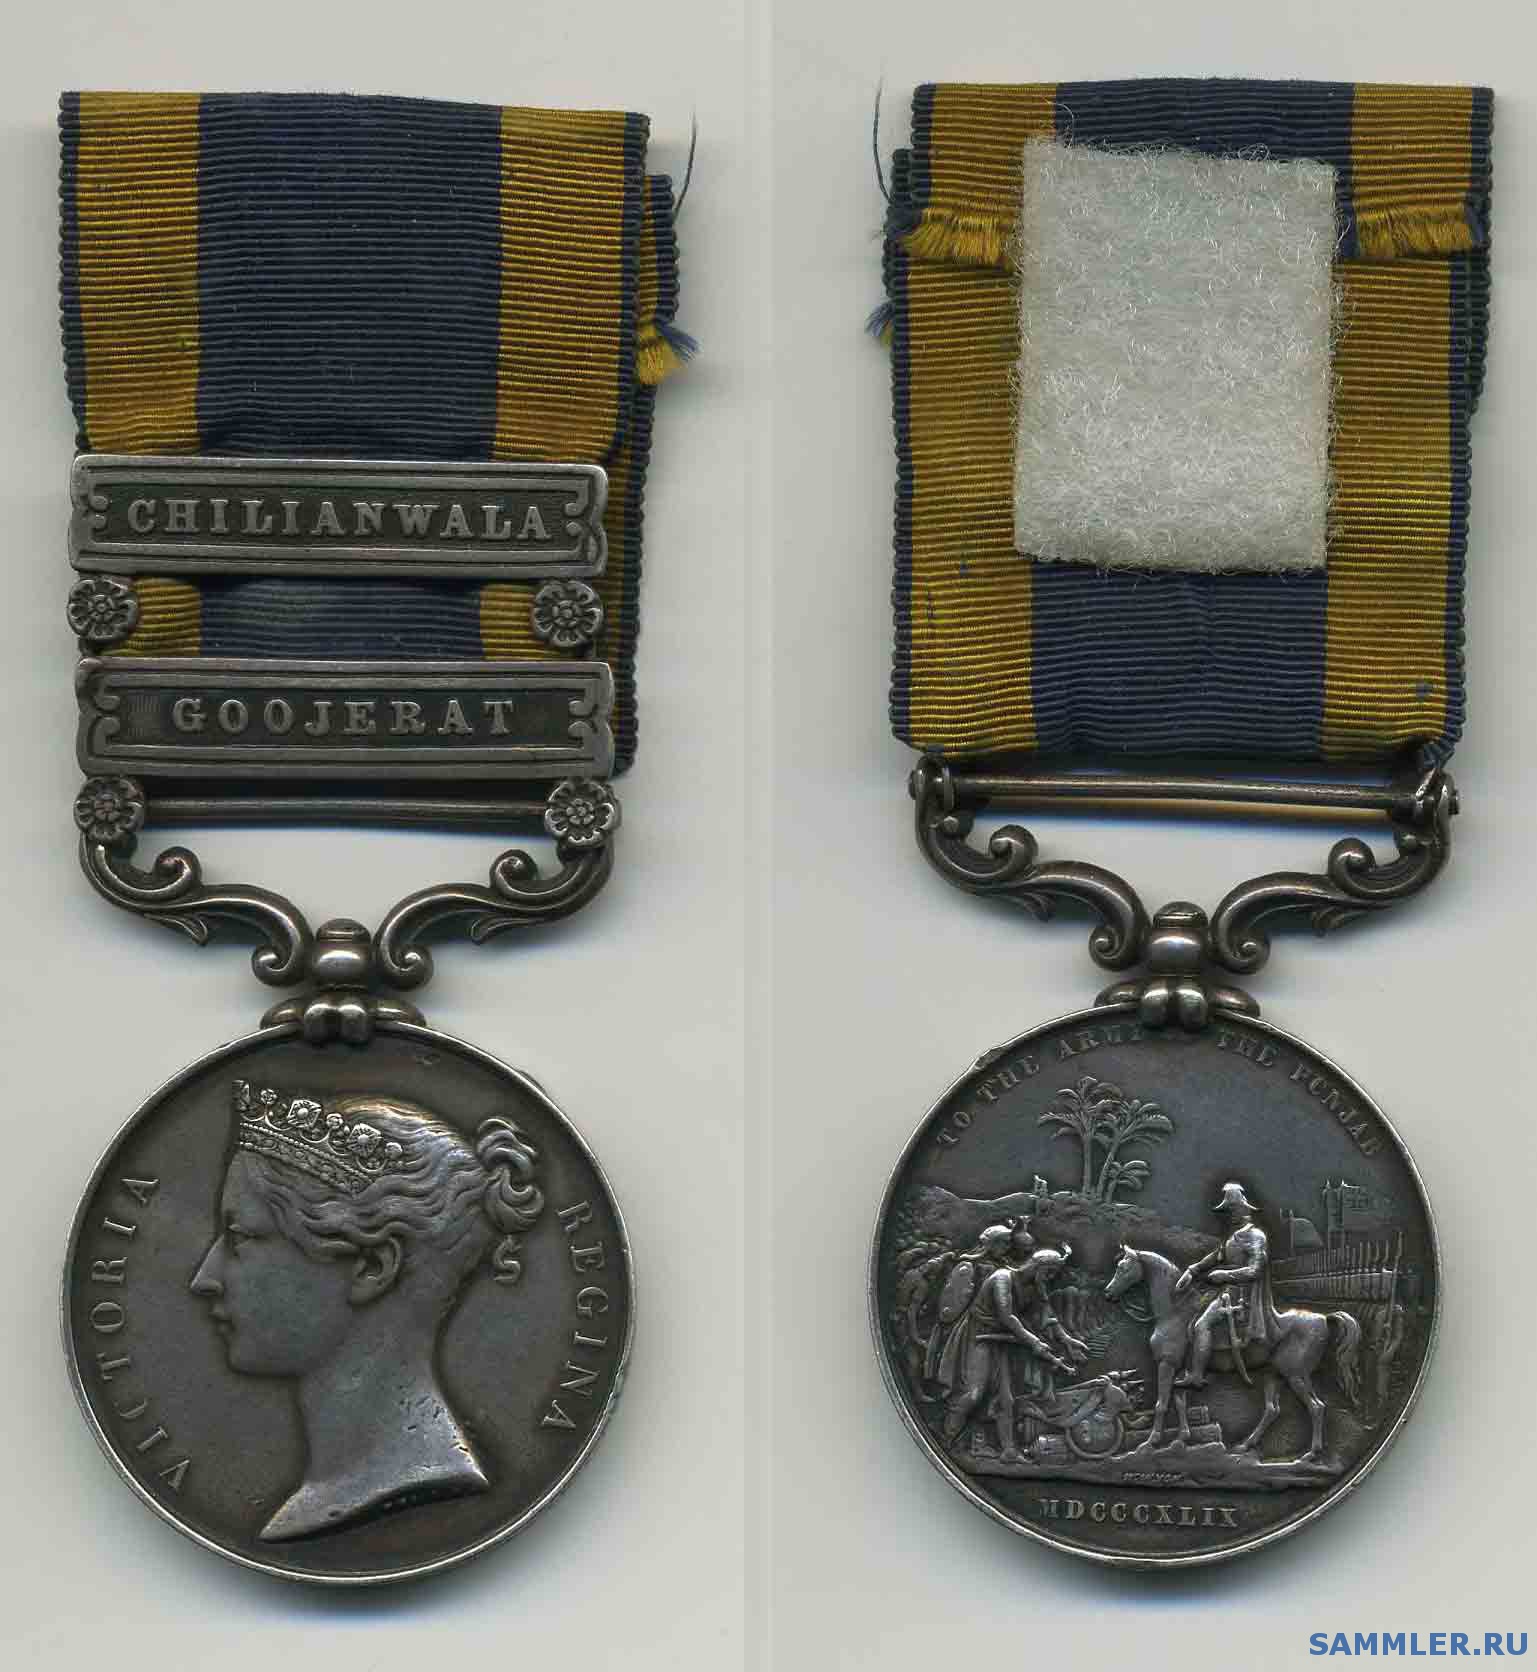 Punjab_Medal.jpg